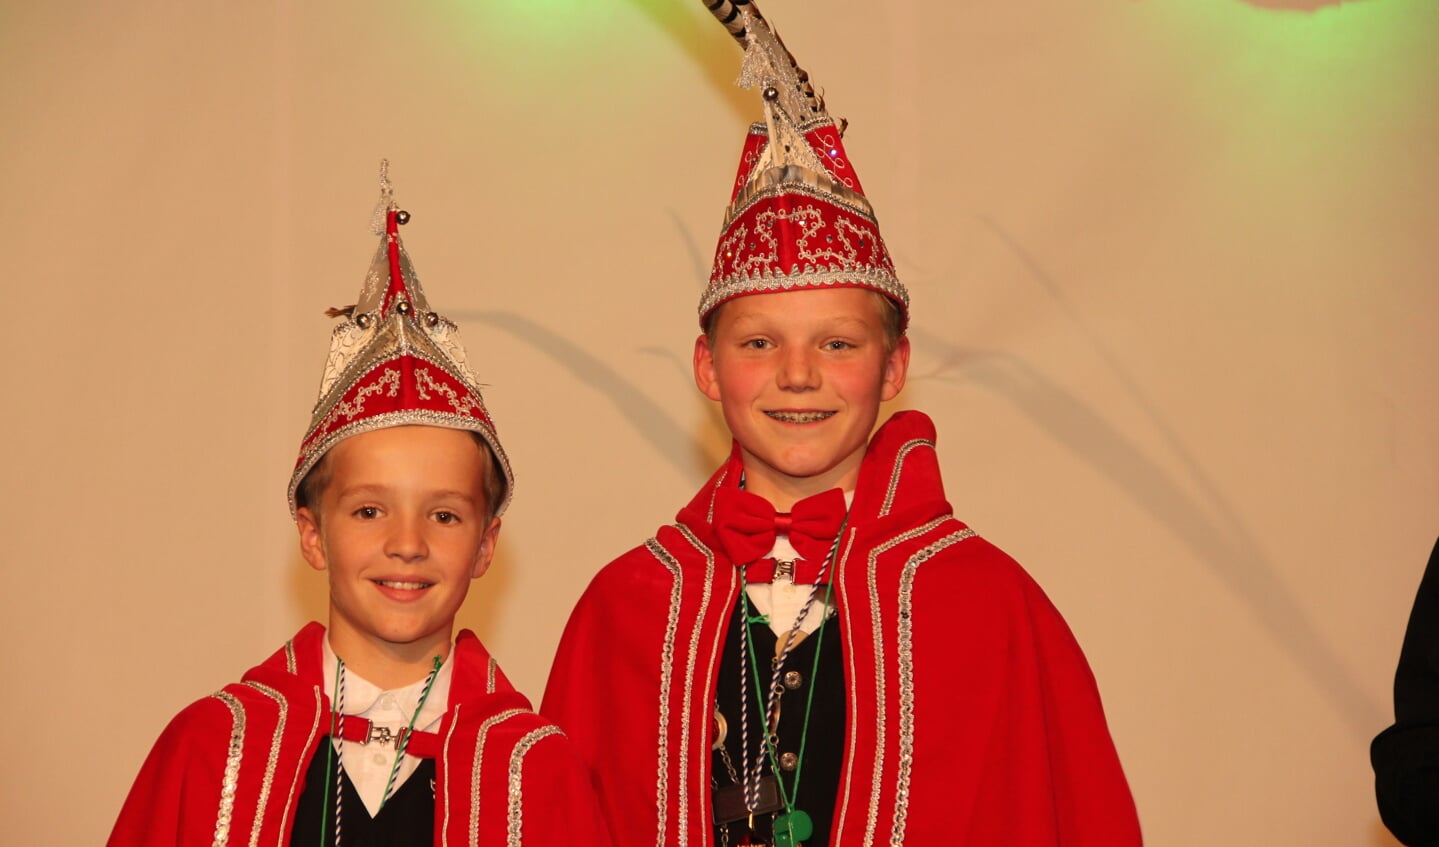 Jeugdprins Rens en adjudant Tristan van Daal van de Keieschieters, Vierlingsbeek.  